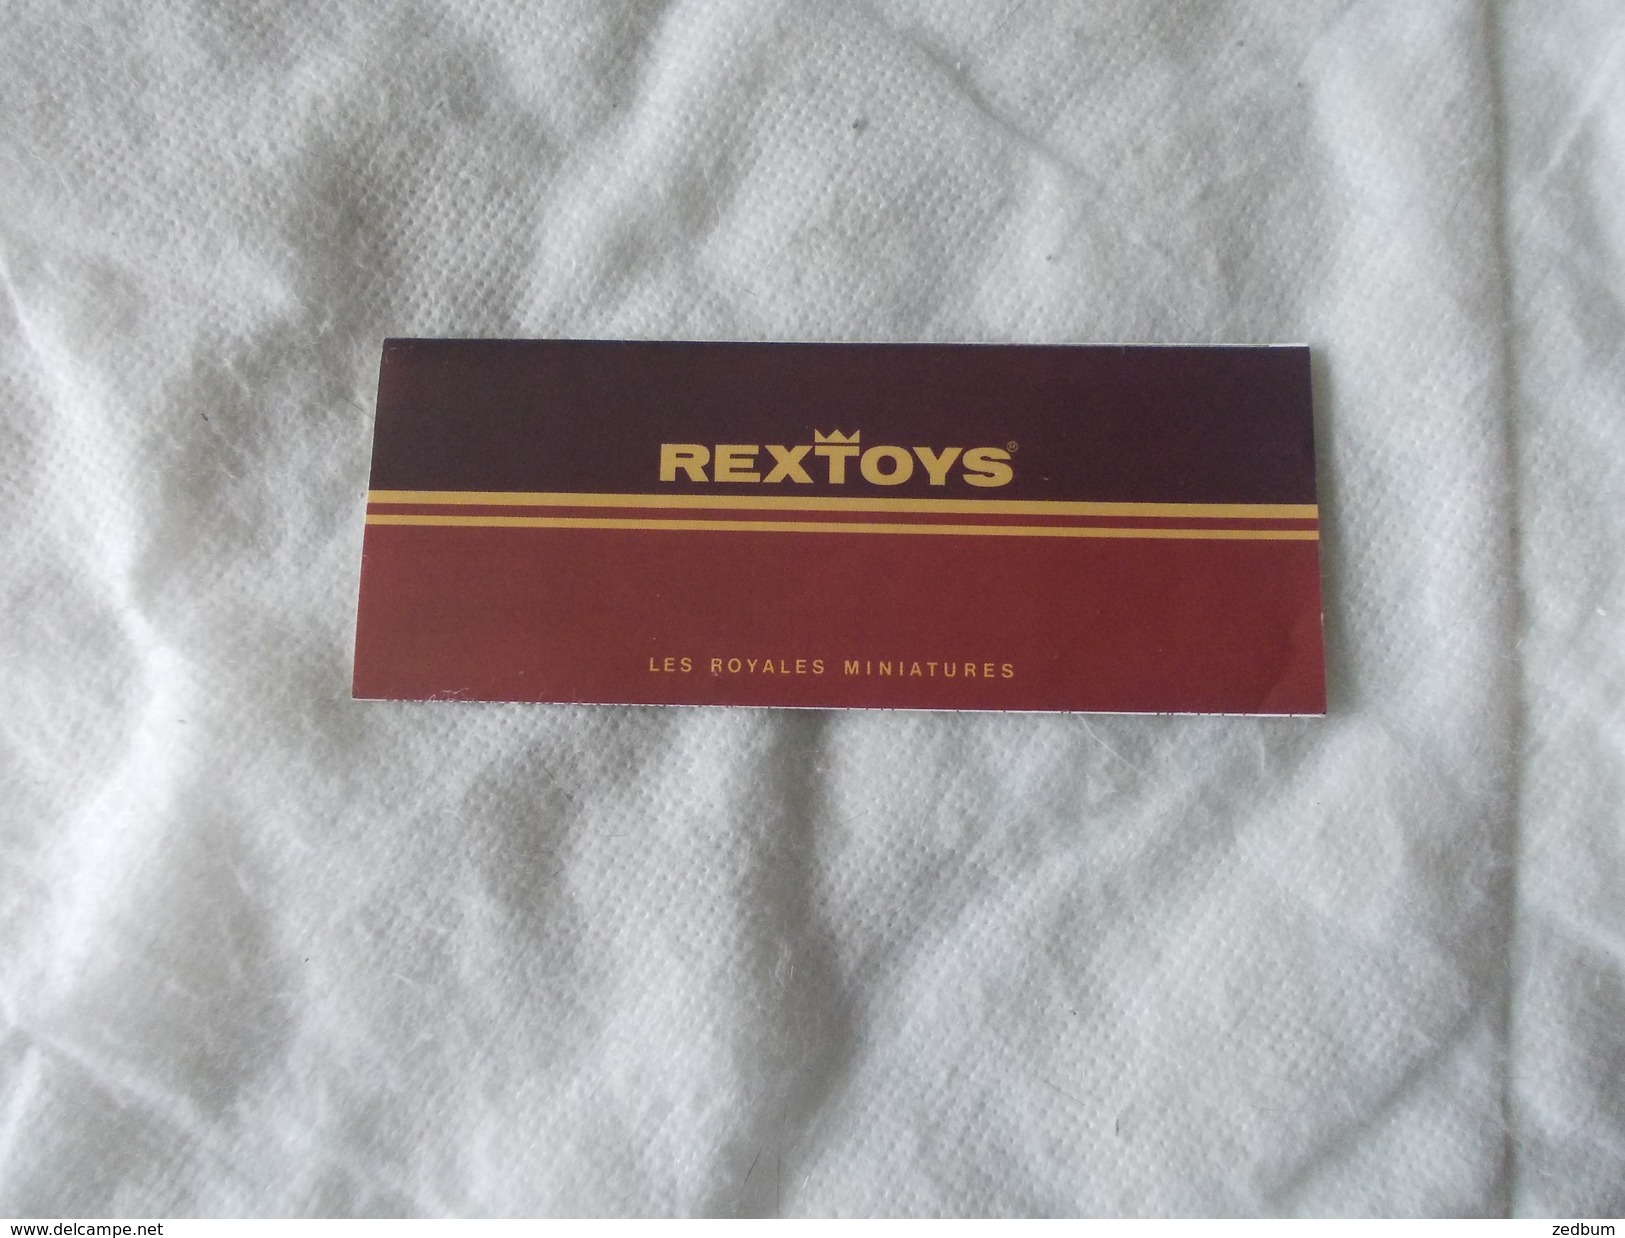 Rextoys Les Royales Miniatures - Modellismo